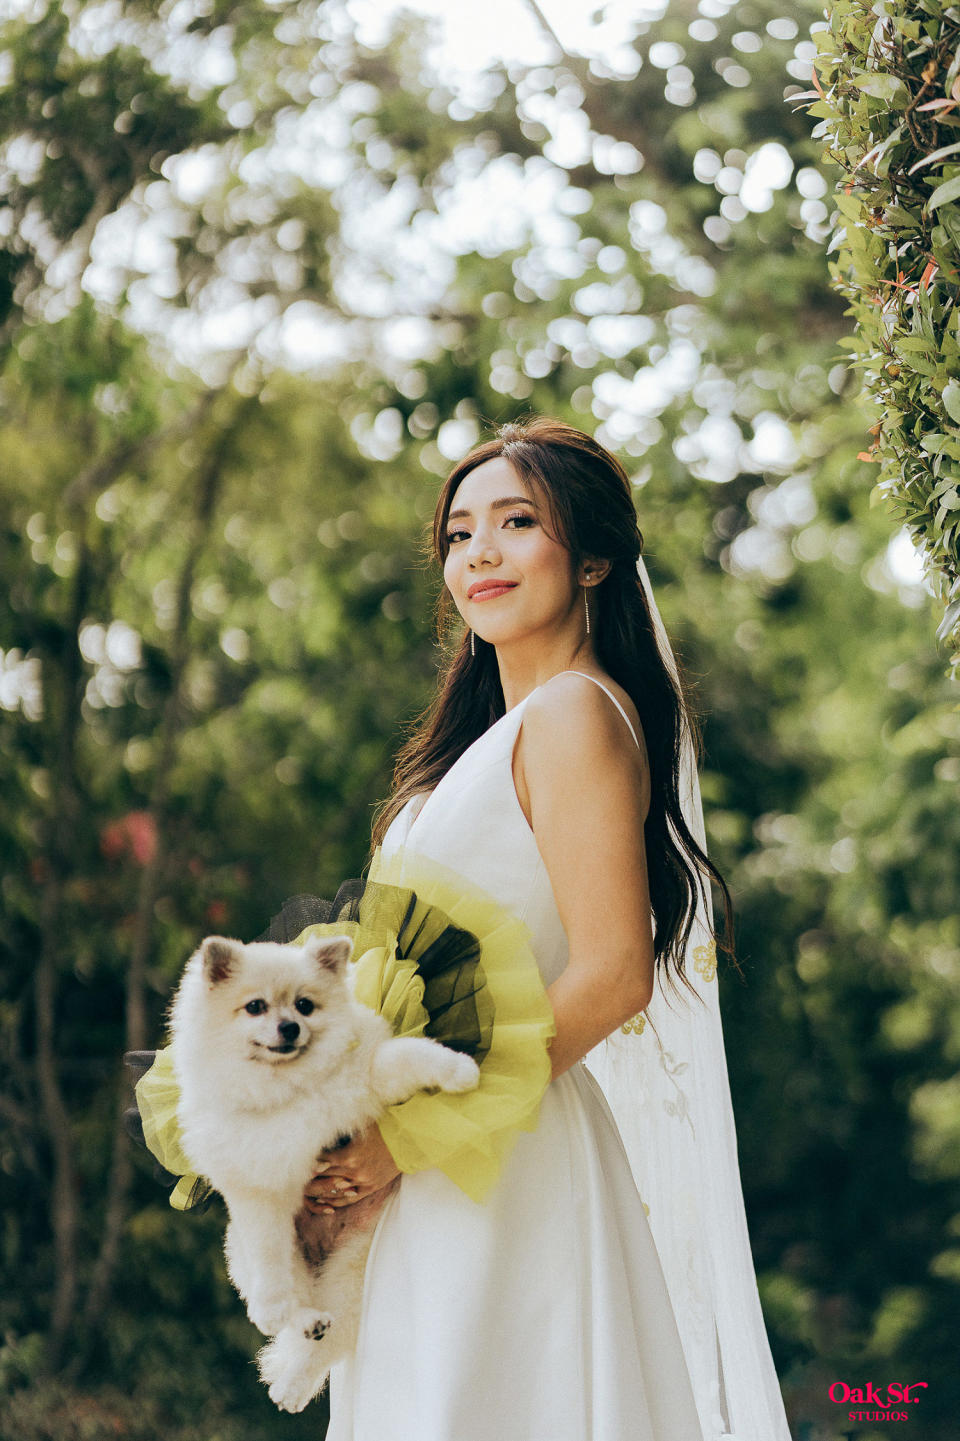 Yuvienco and Sago pose for a bridal portrait. (Courtesy Oak St. Studios)